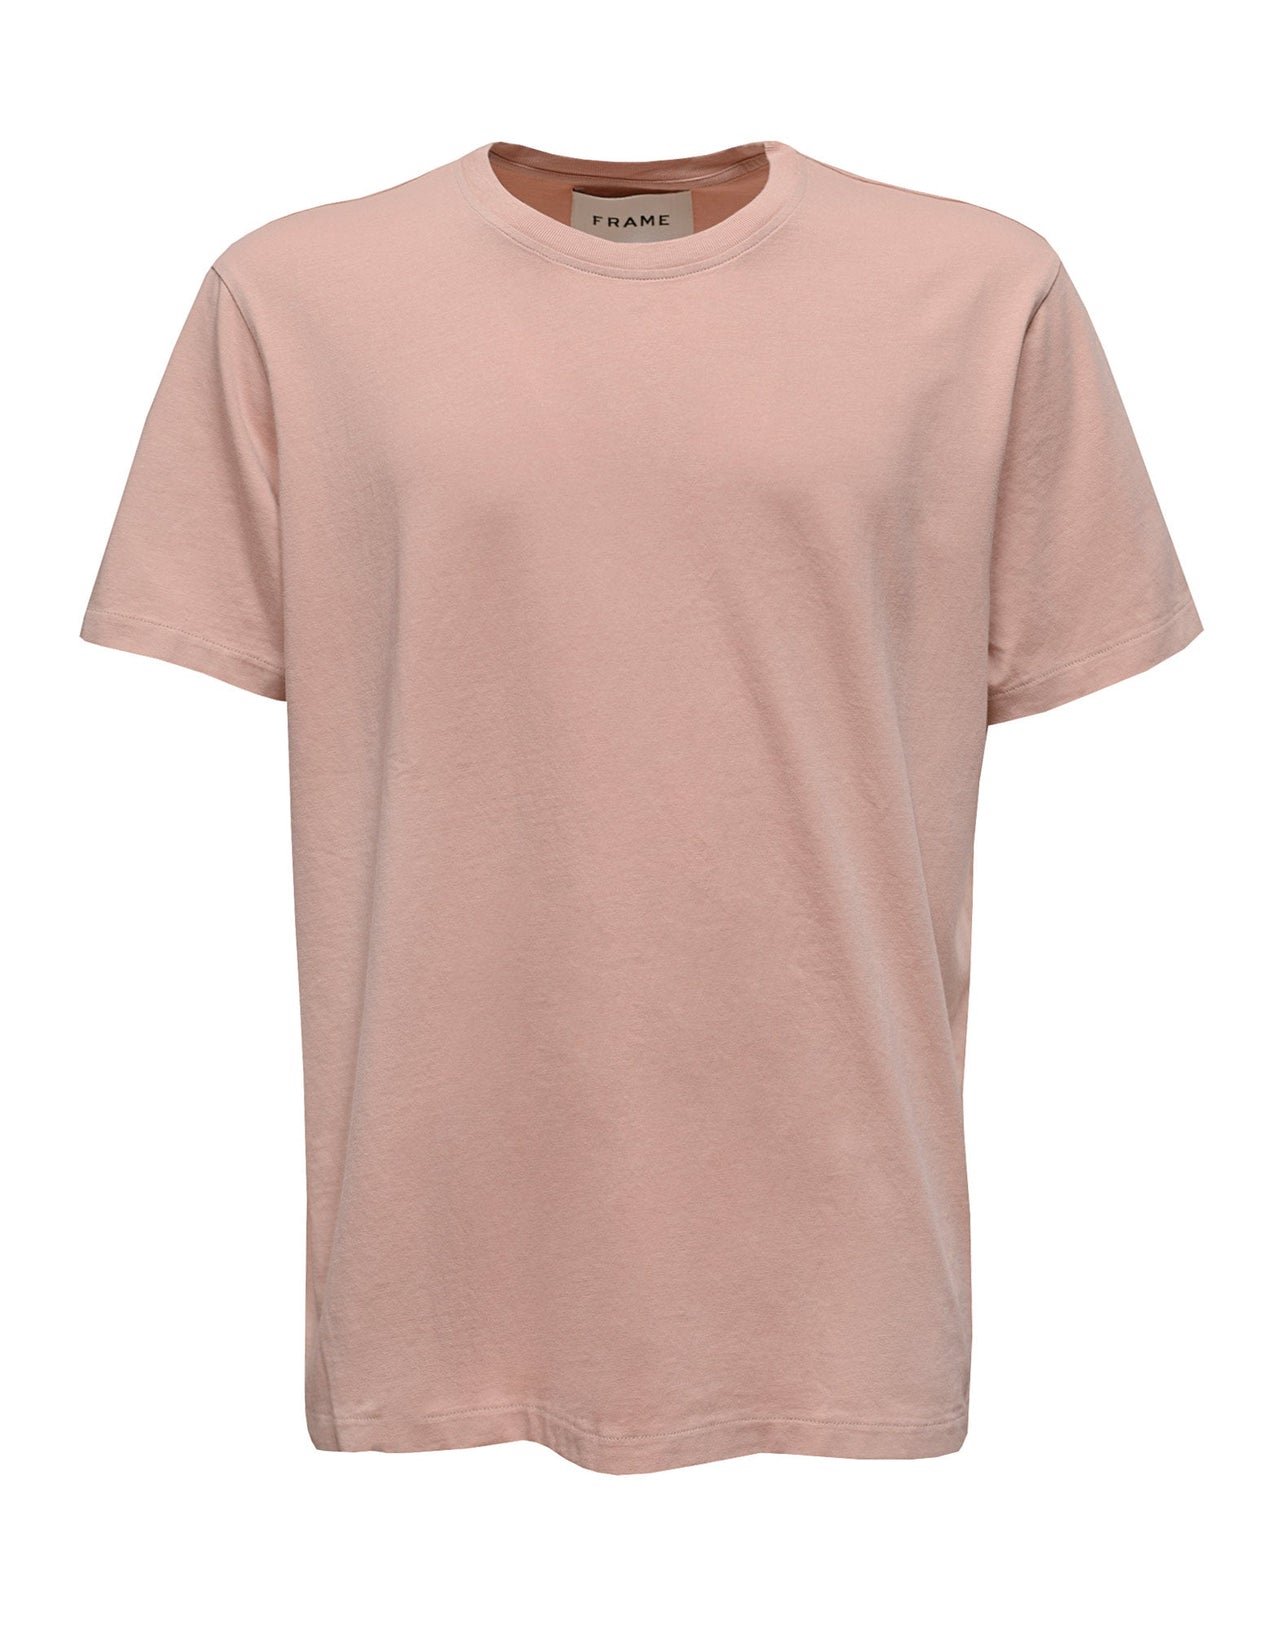 Frame L.A. Use pink cotton t-shirts